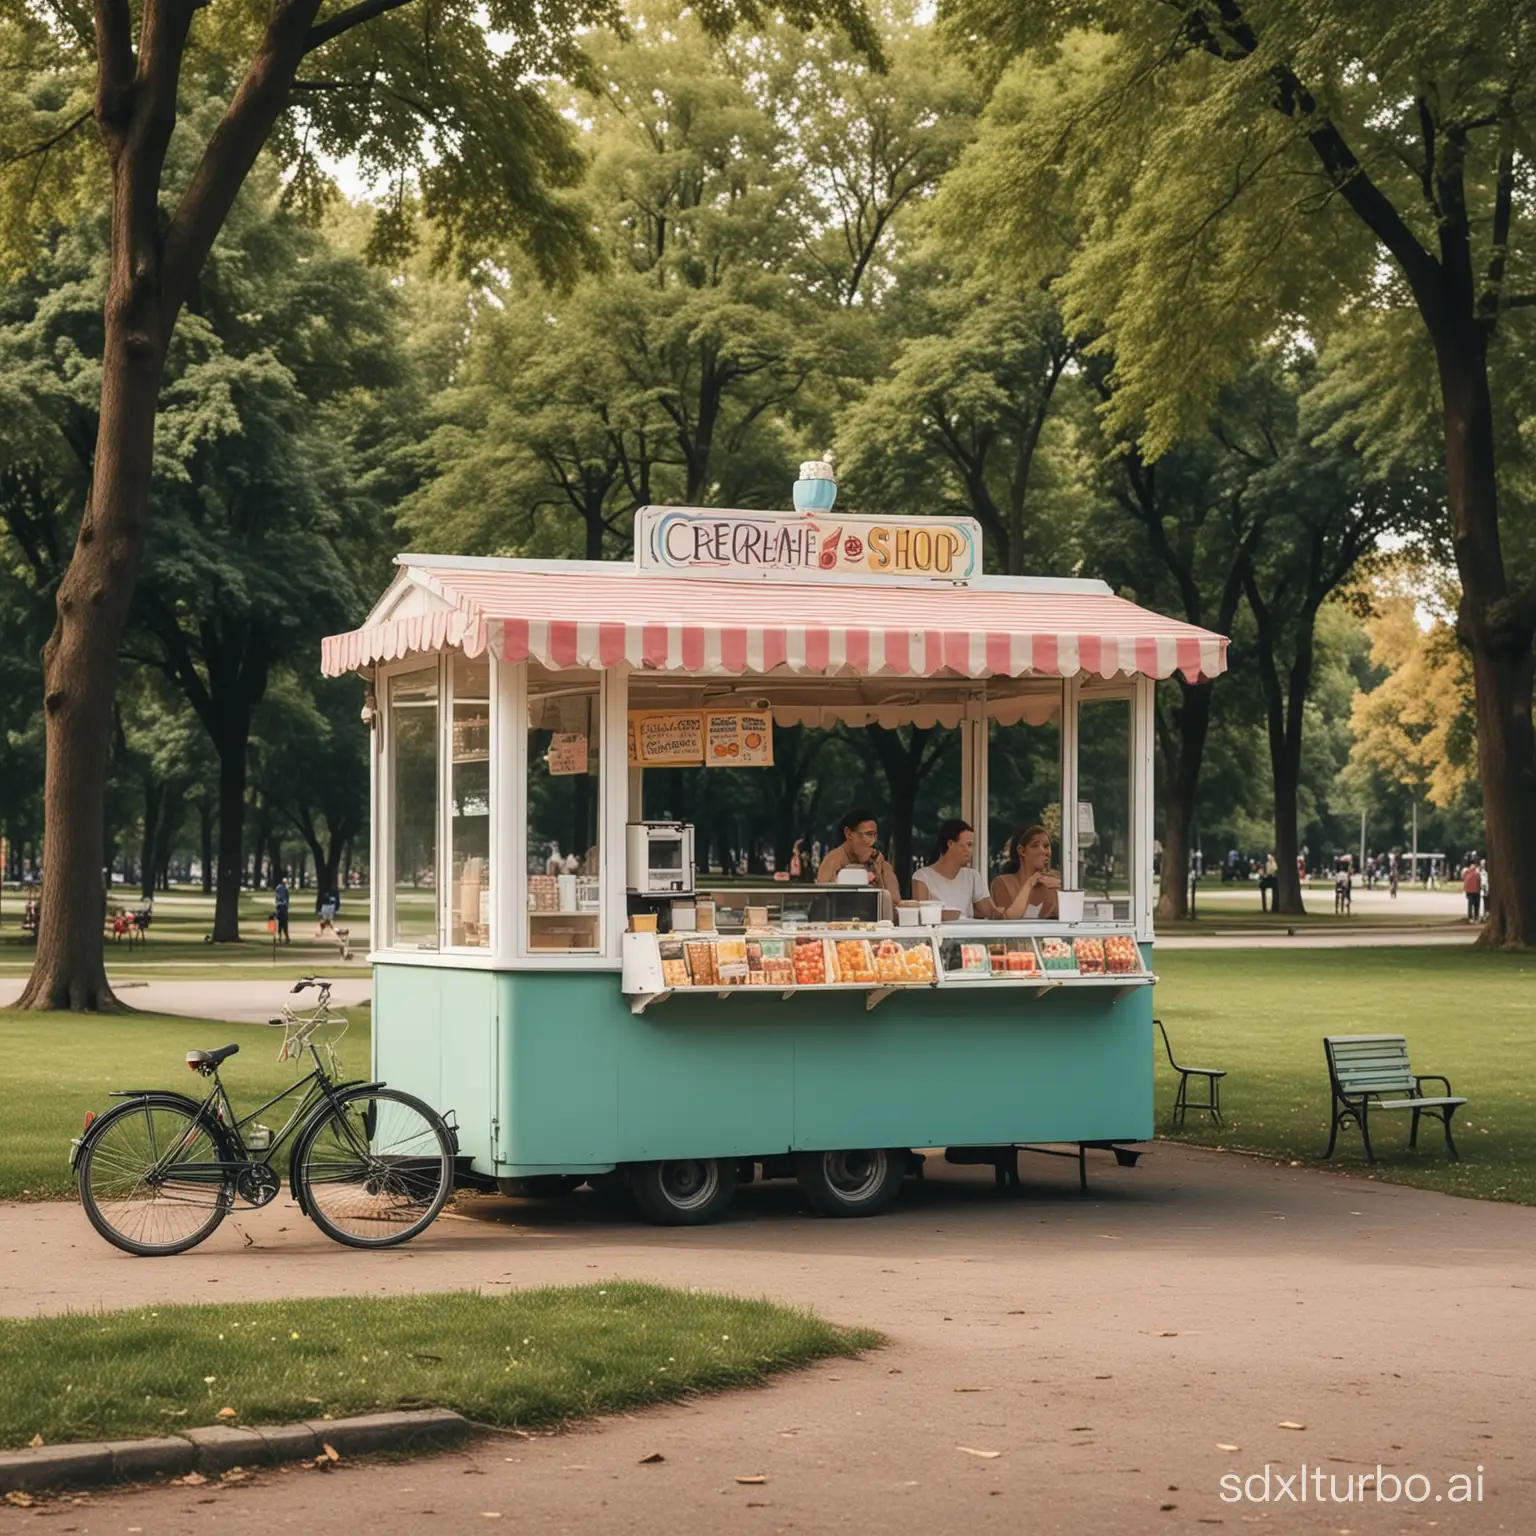 icecream shop in a park